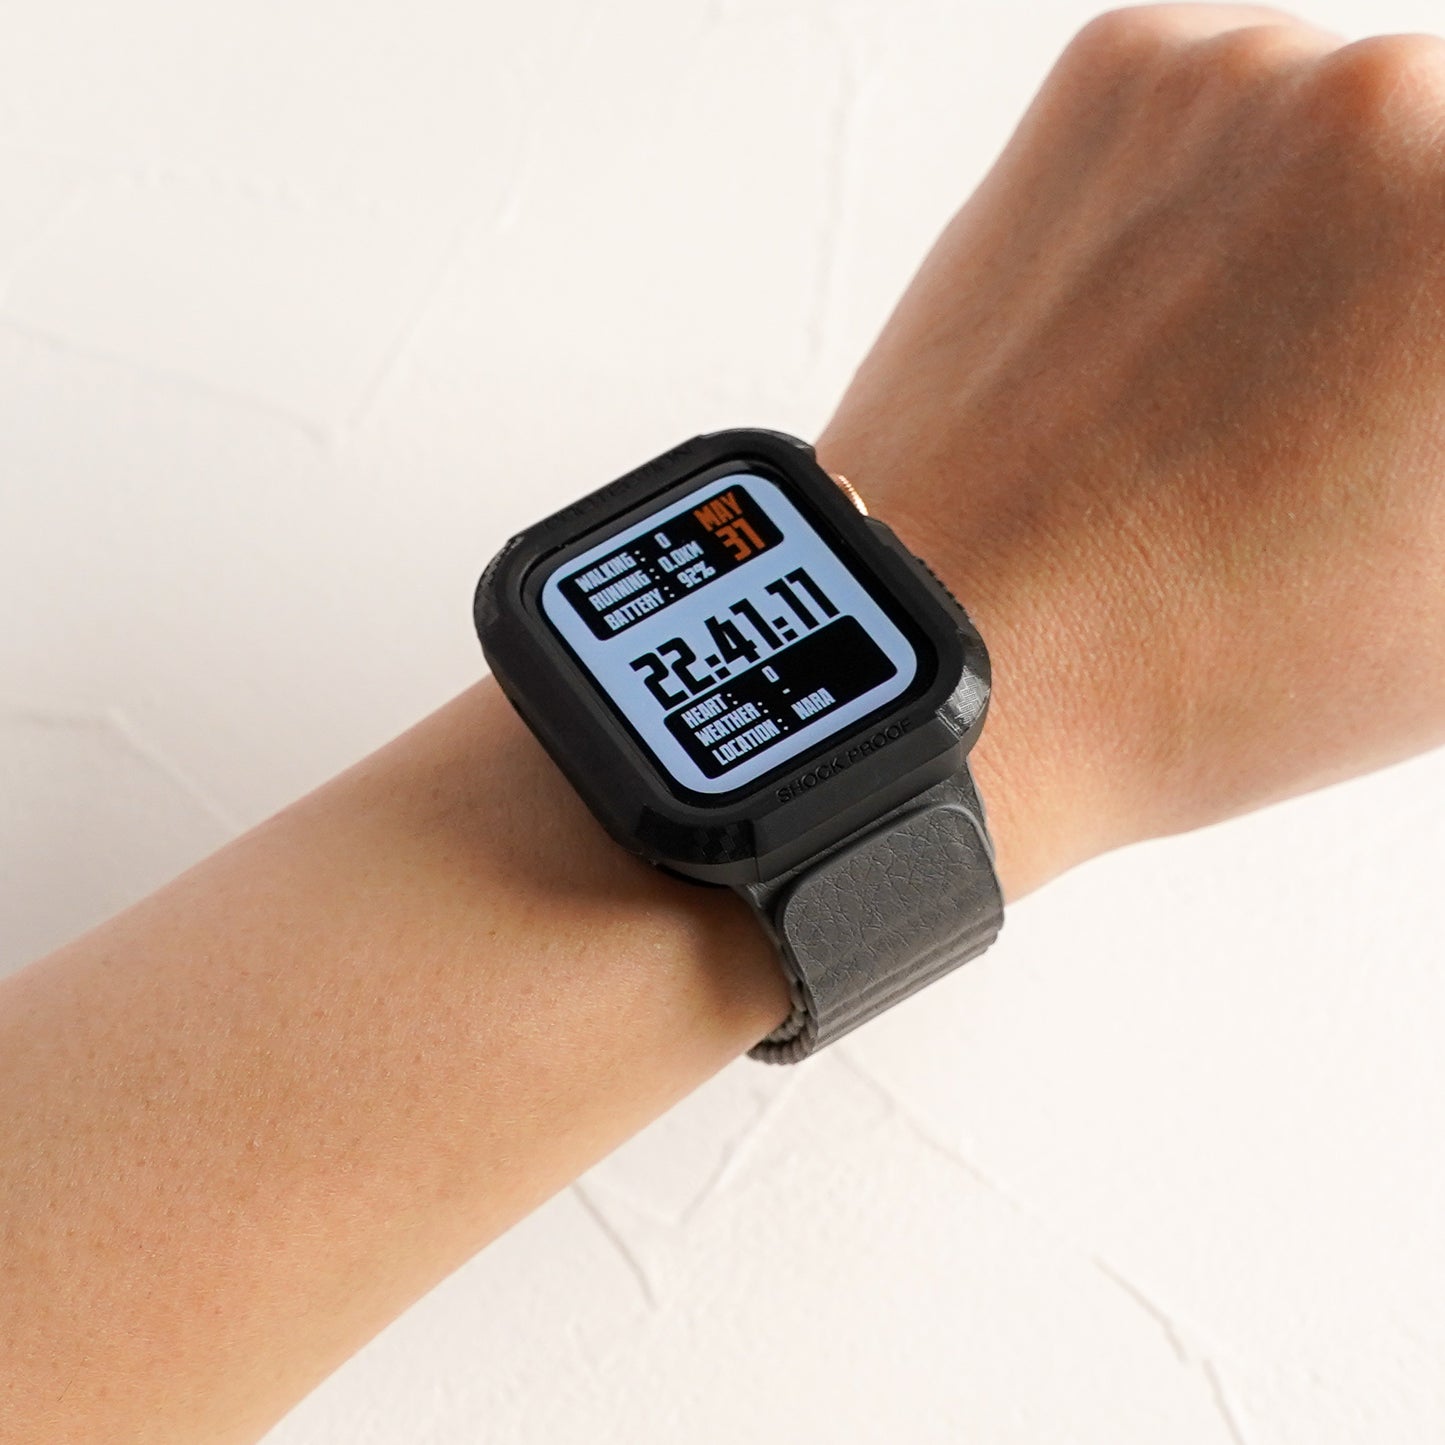 TPU プロテクト マット 保護フレーム ソフトタイプ アップルウォッチ ハーフカバー Apple Watch